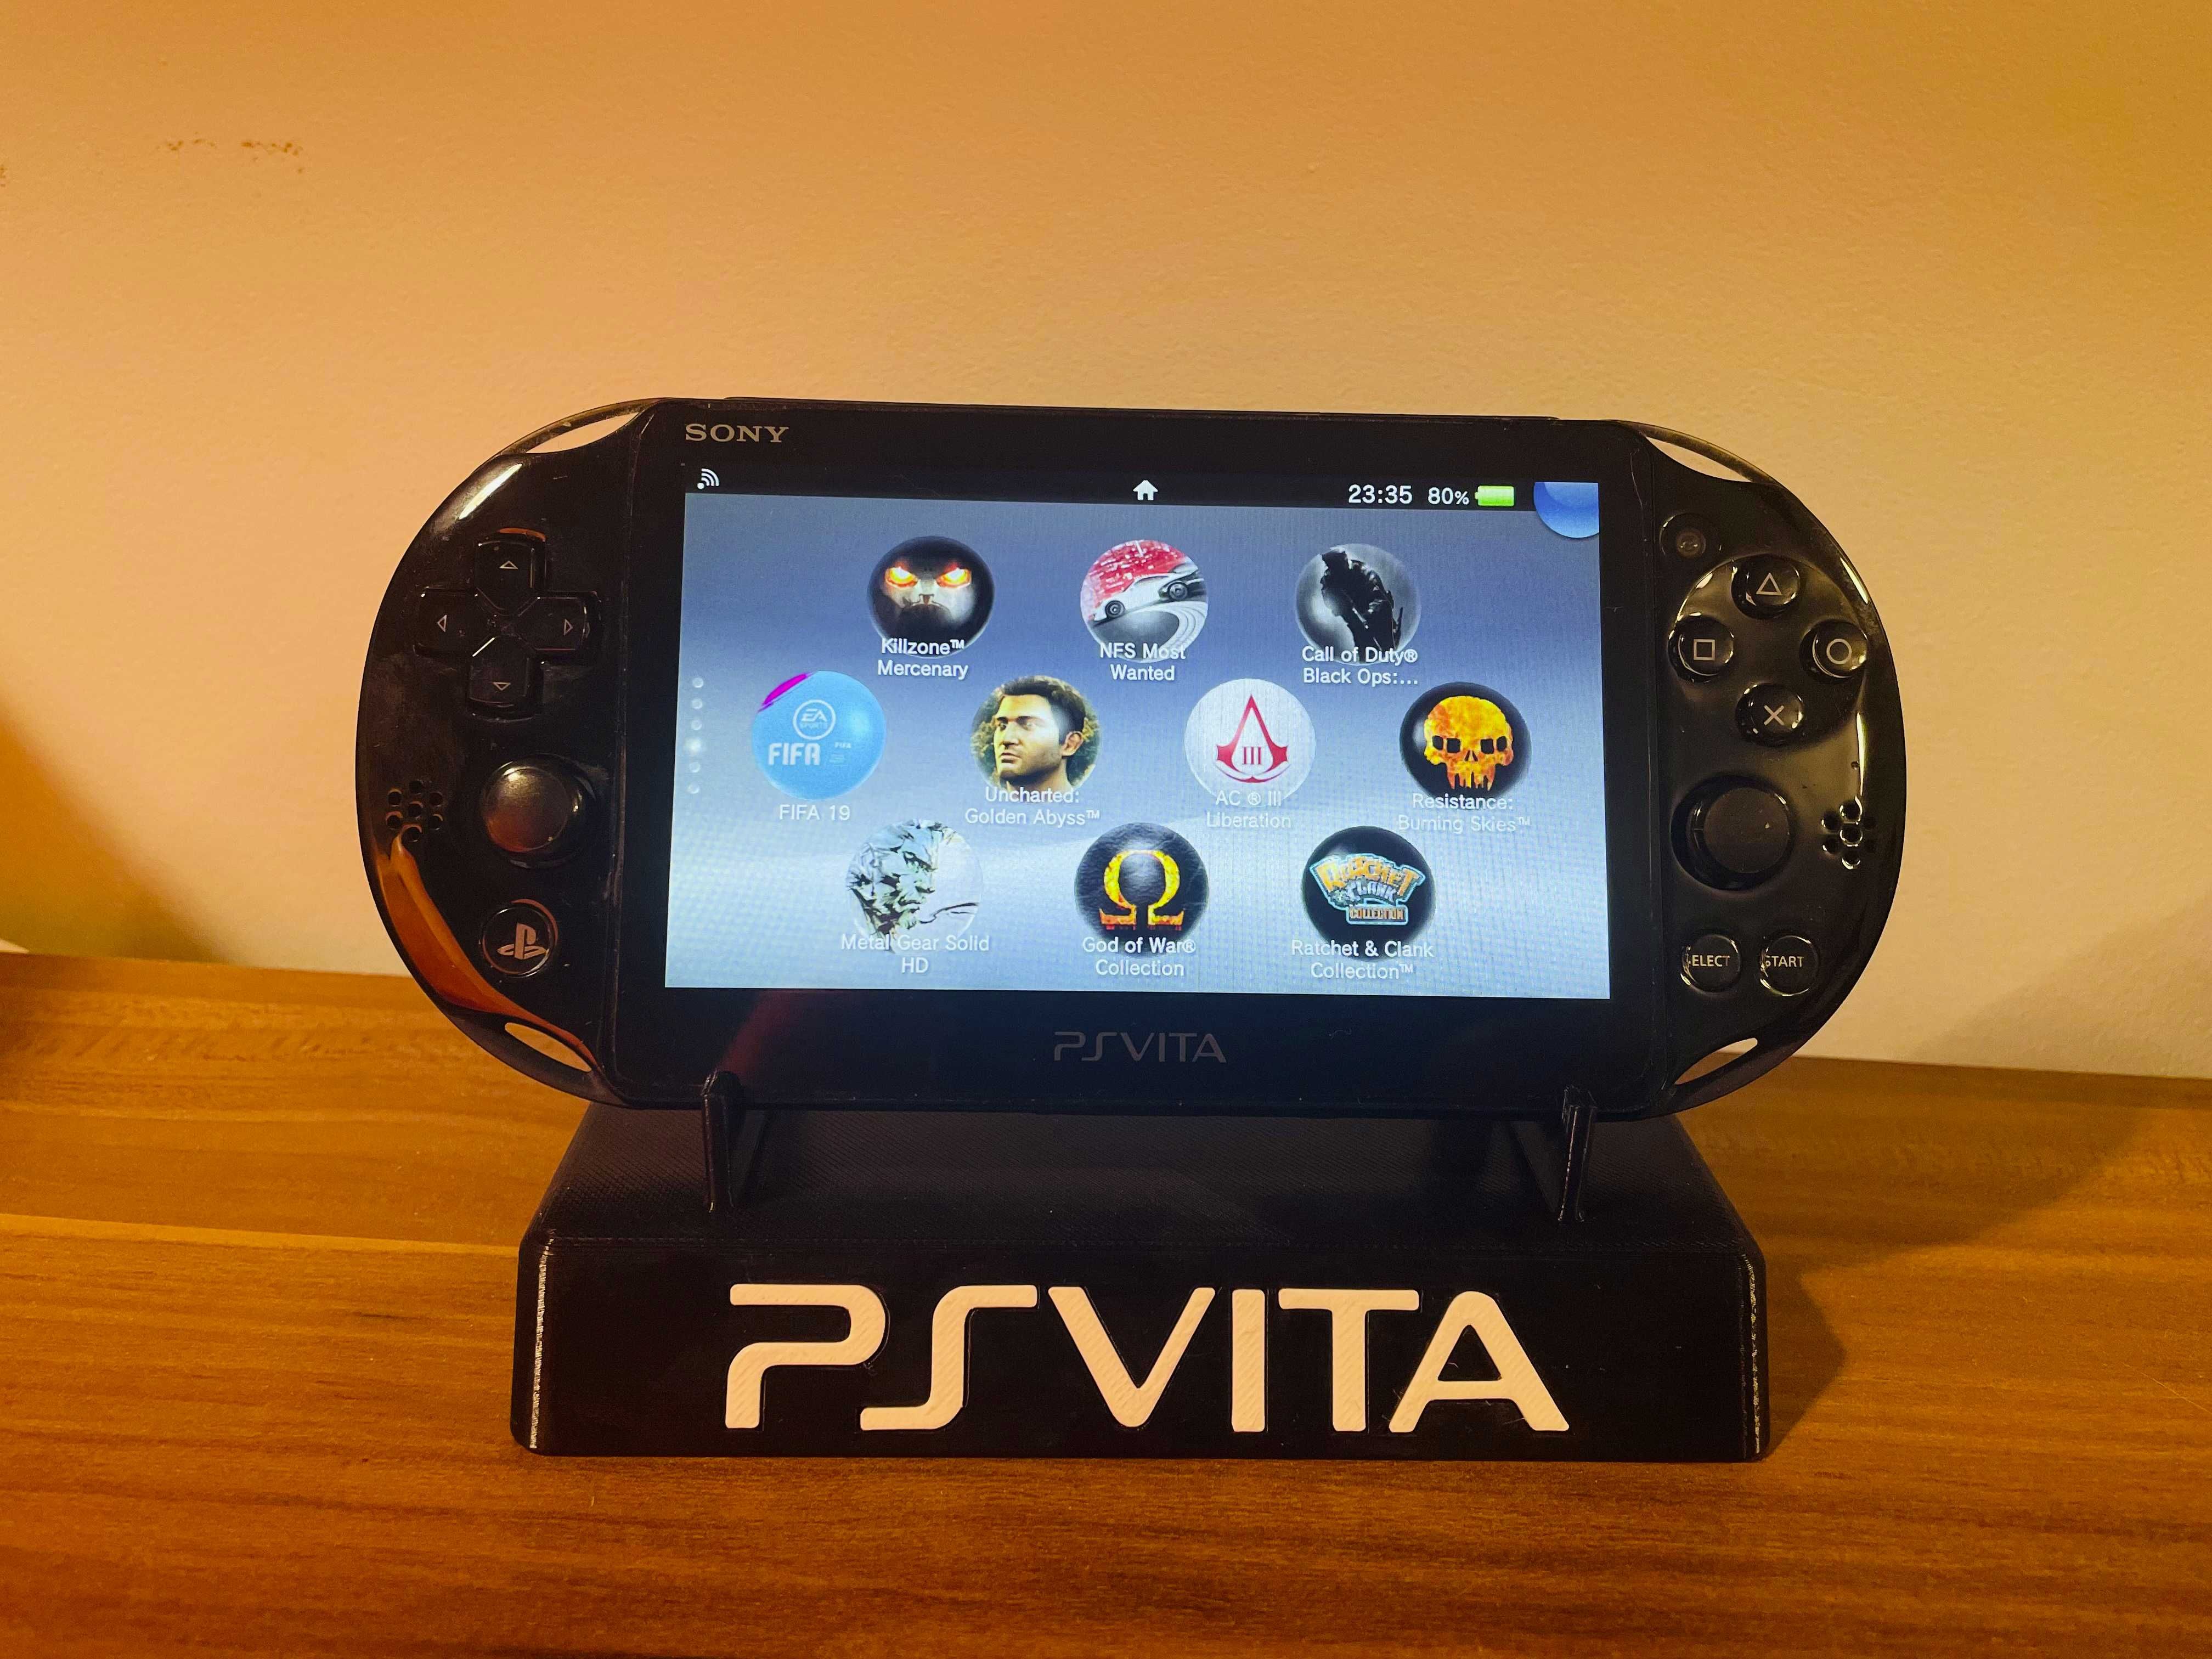 PS Vita - Vand suport tip stand pentru consola (Playstation Vita)